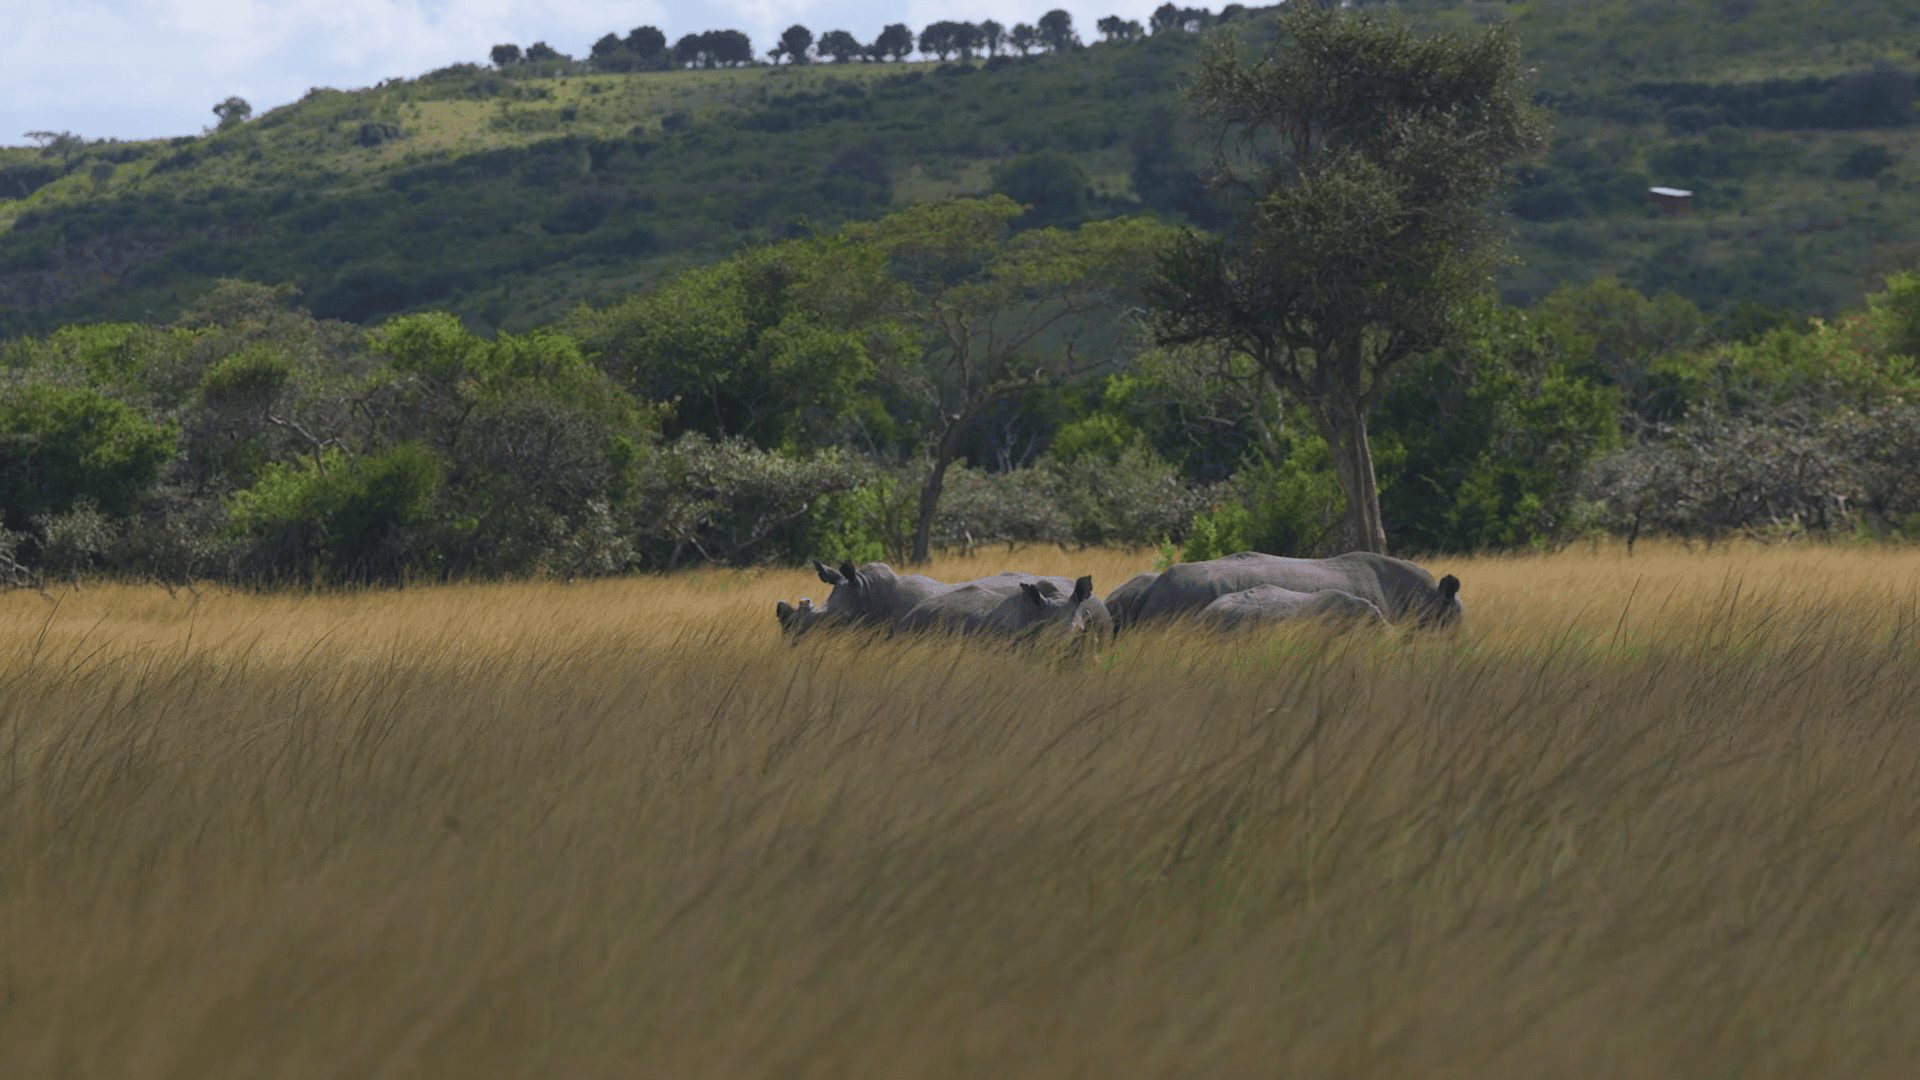 White rhinos at Akagera National Park in Rwanda; image by Yves Irankunda